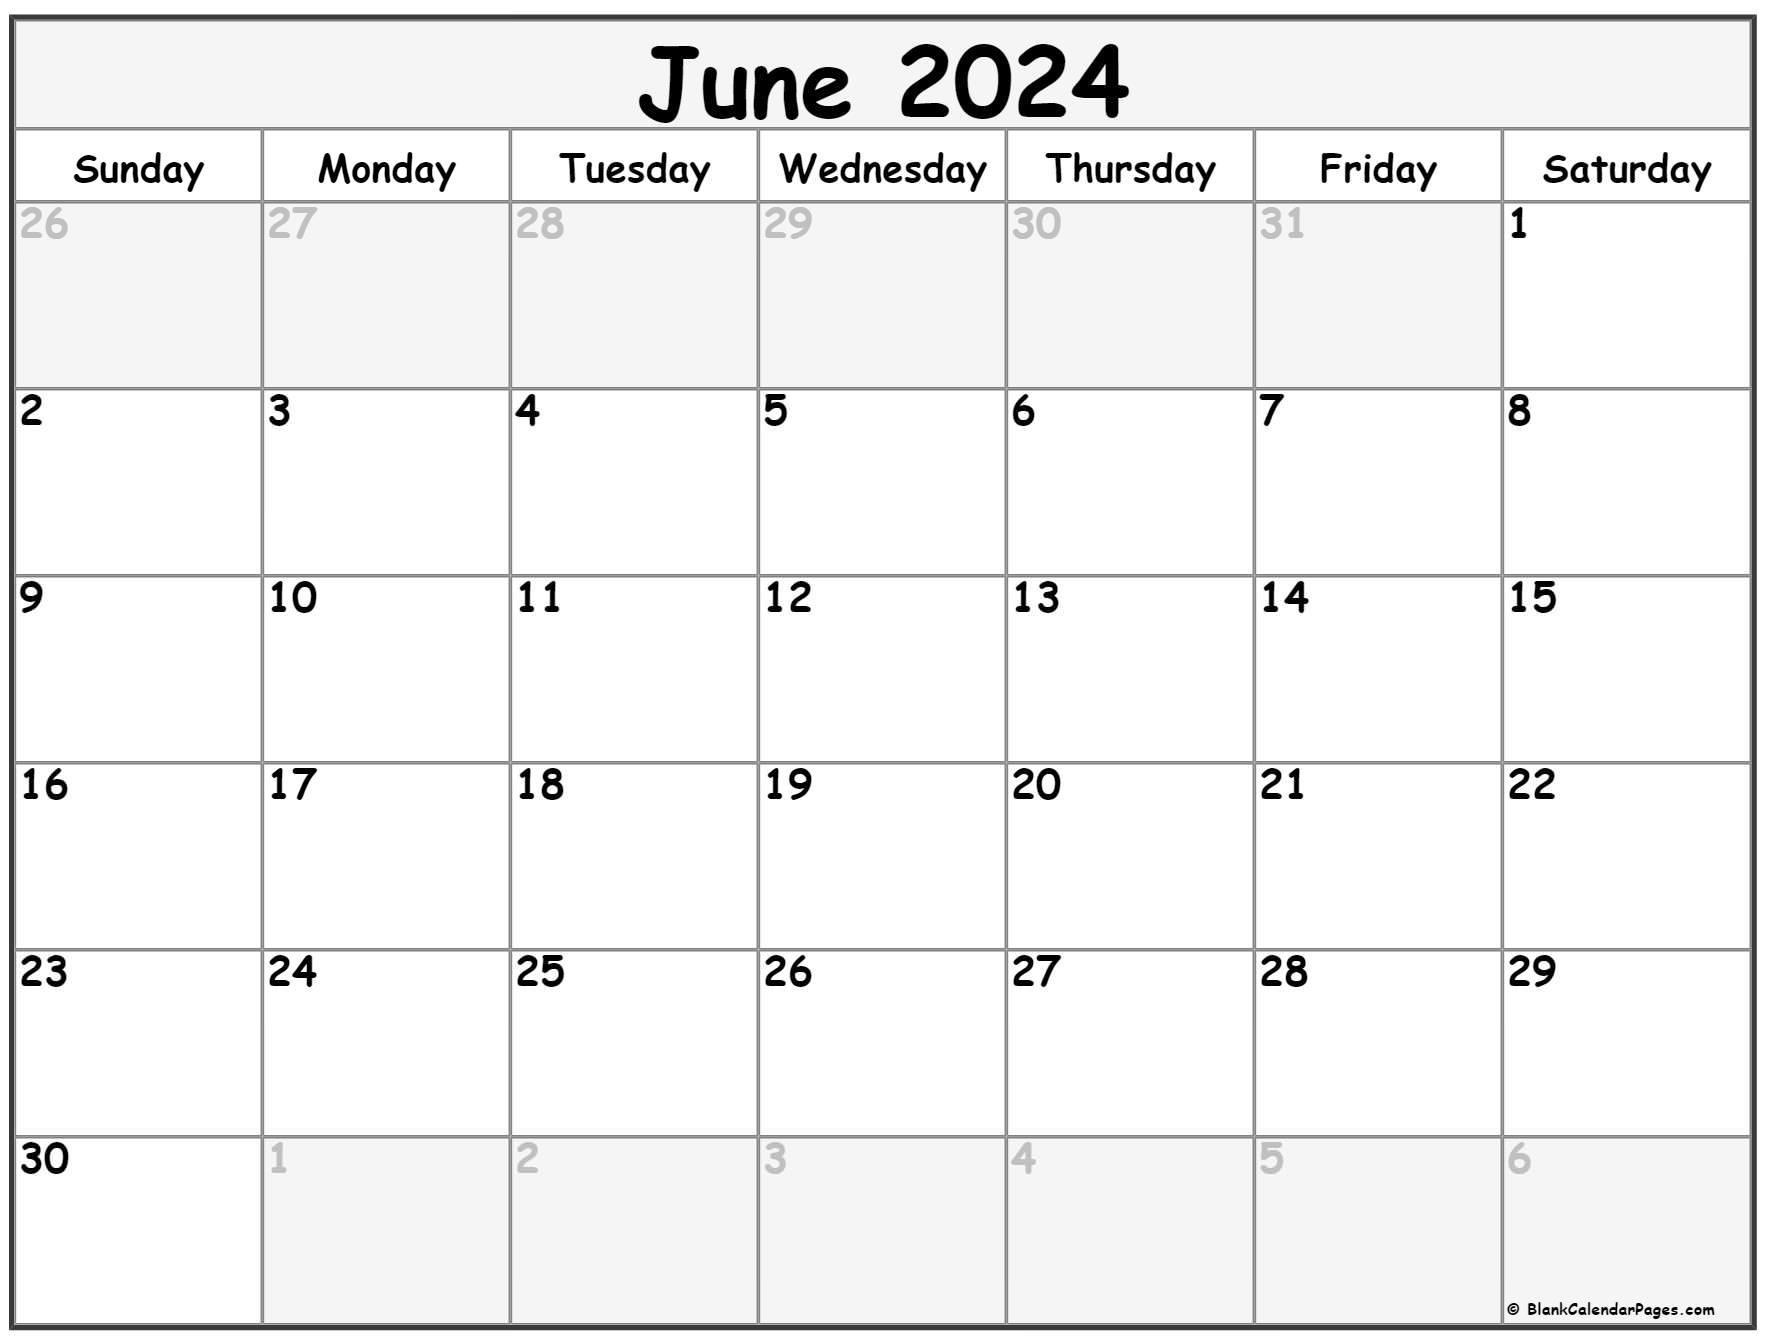 June 2024 Calendar | Free Printable Calendar for 2024 June Printable Calendar